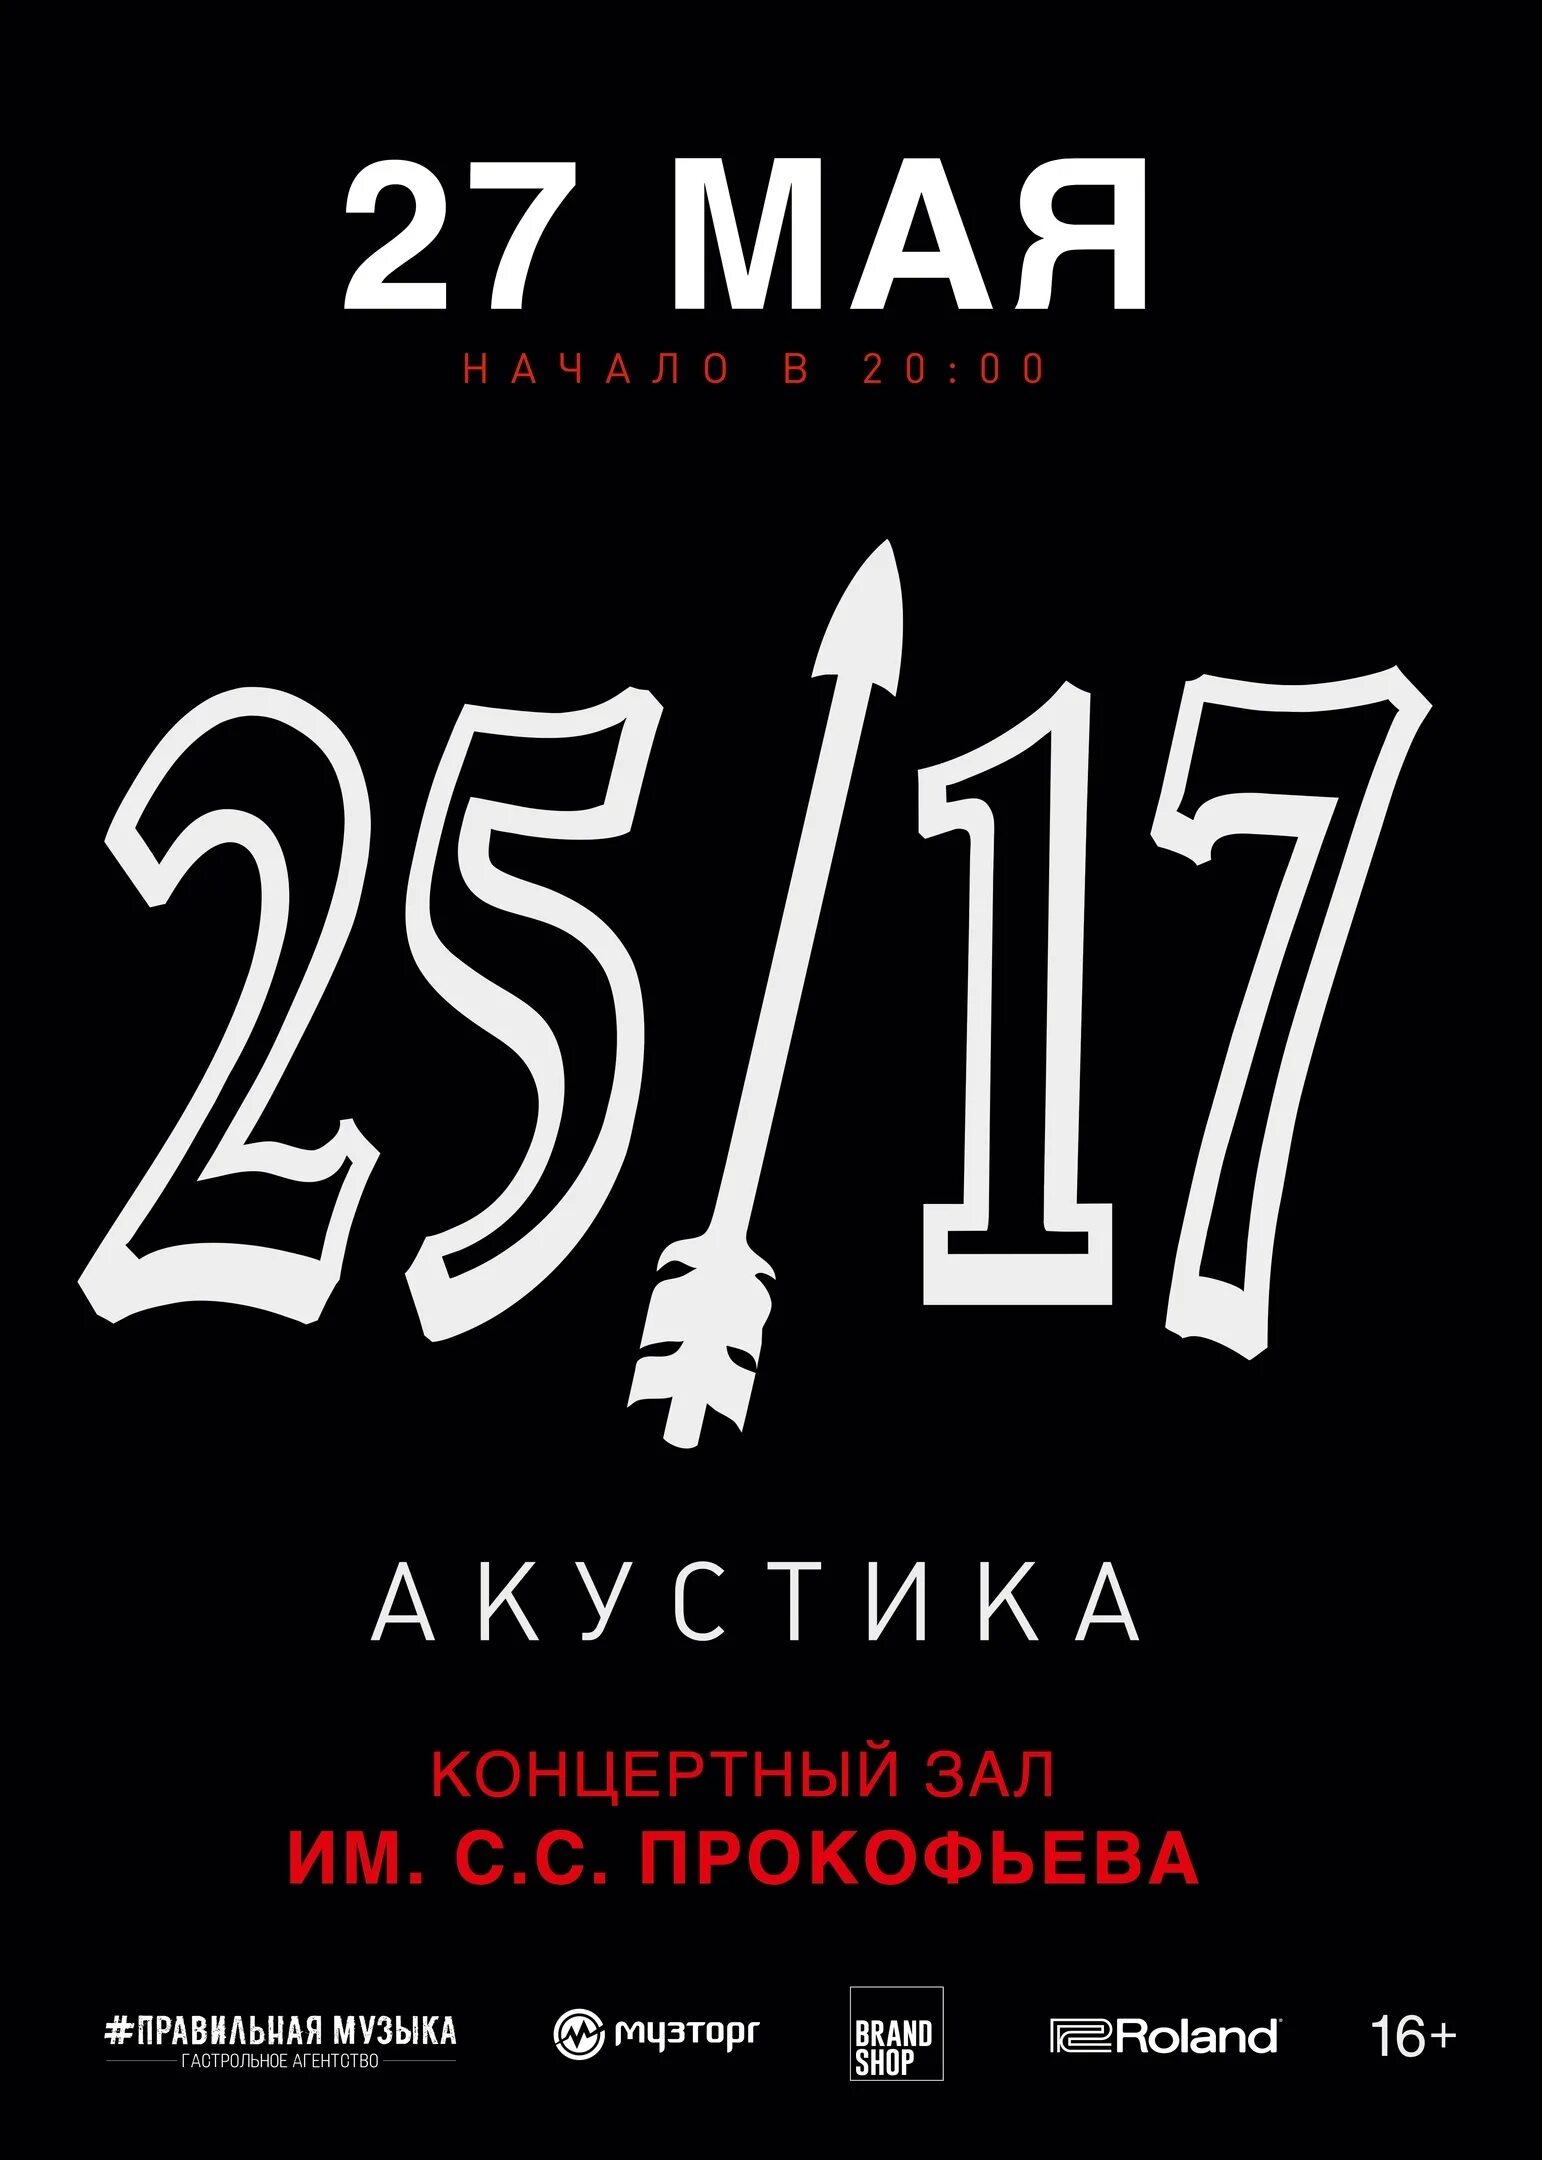 Группа 25/17. 25/17 Концерт. 25/17 Логотип. 25 17 Афиша концерта.